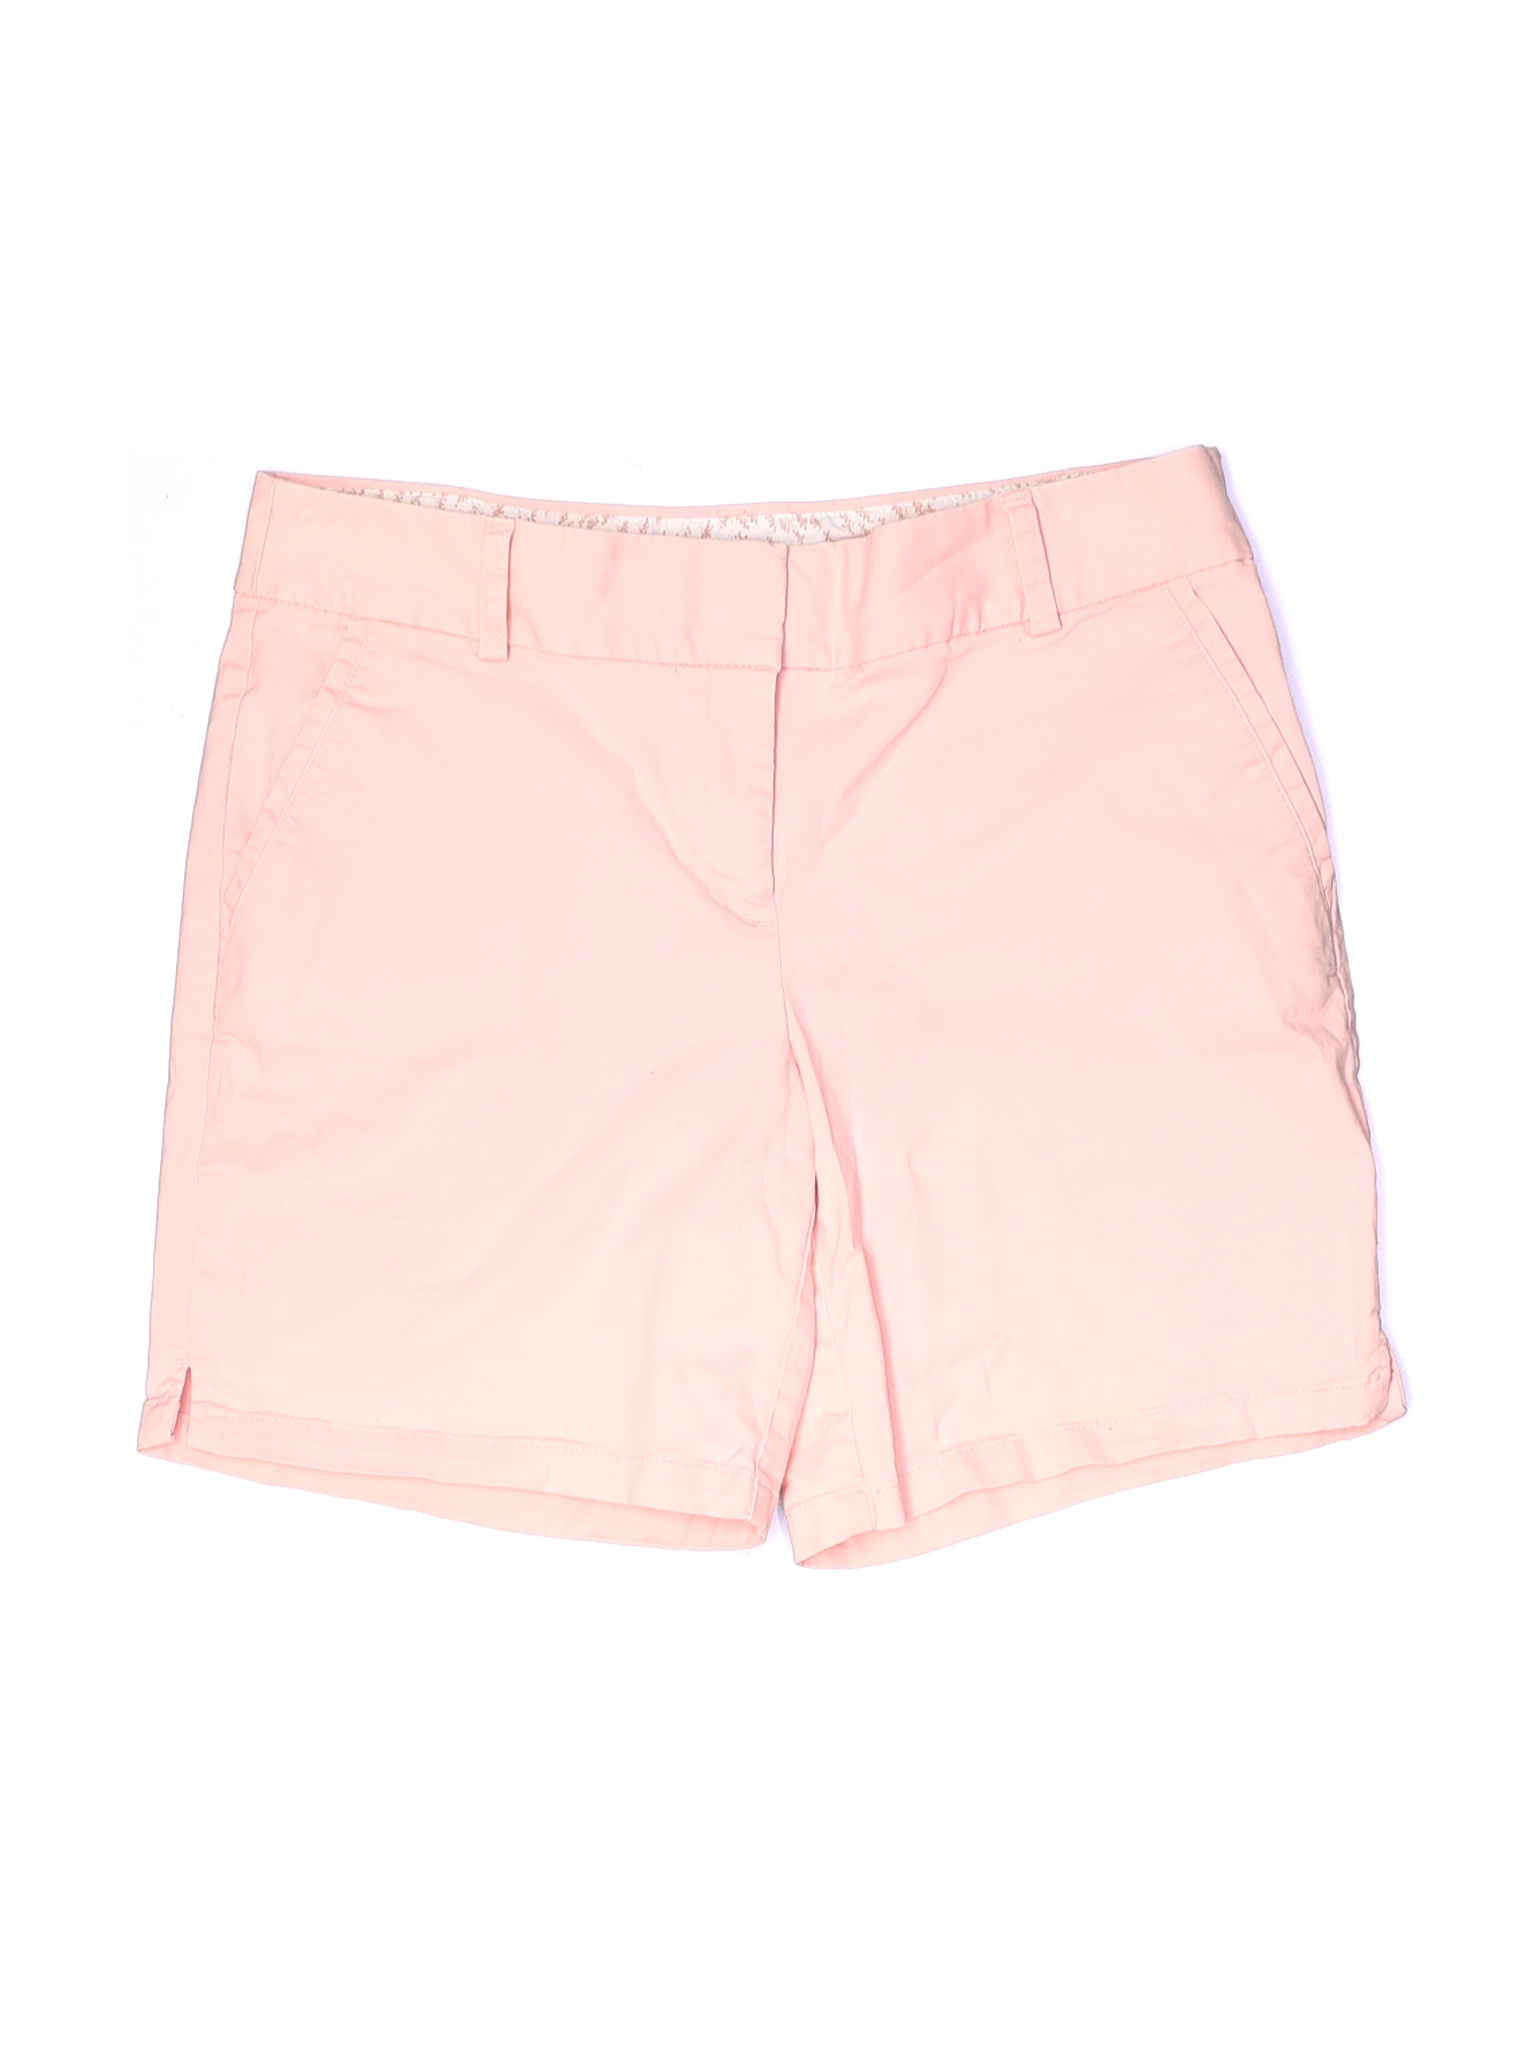 Ann Taylor LOFT Women Pink Dressy Shorts 10 | eBay